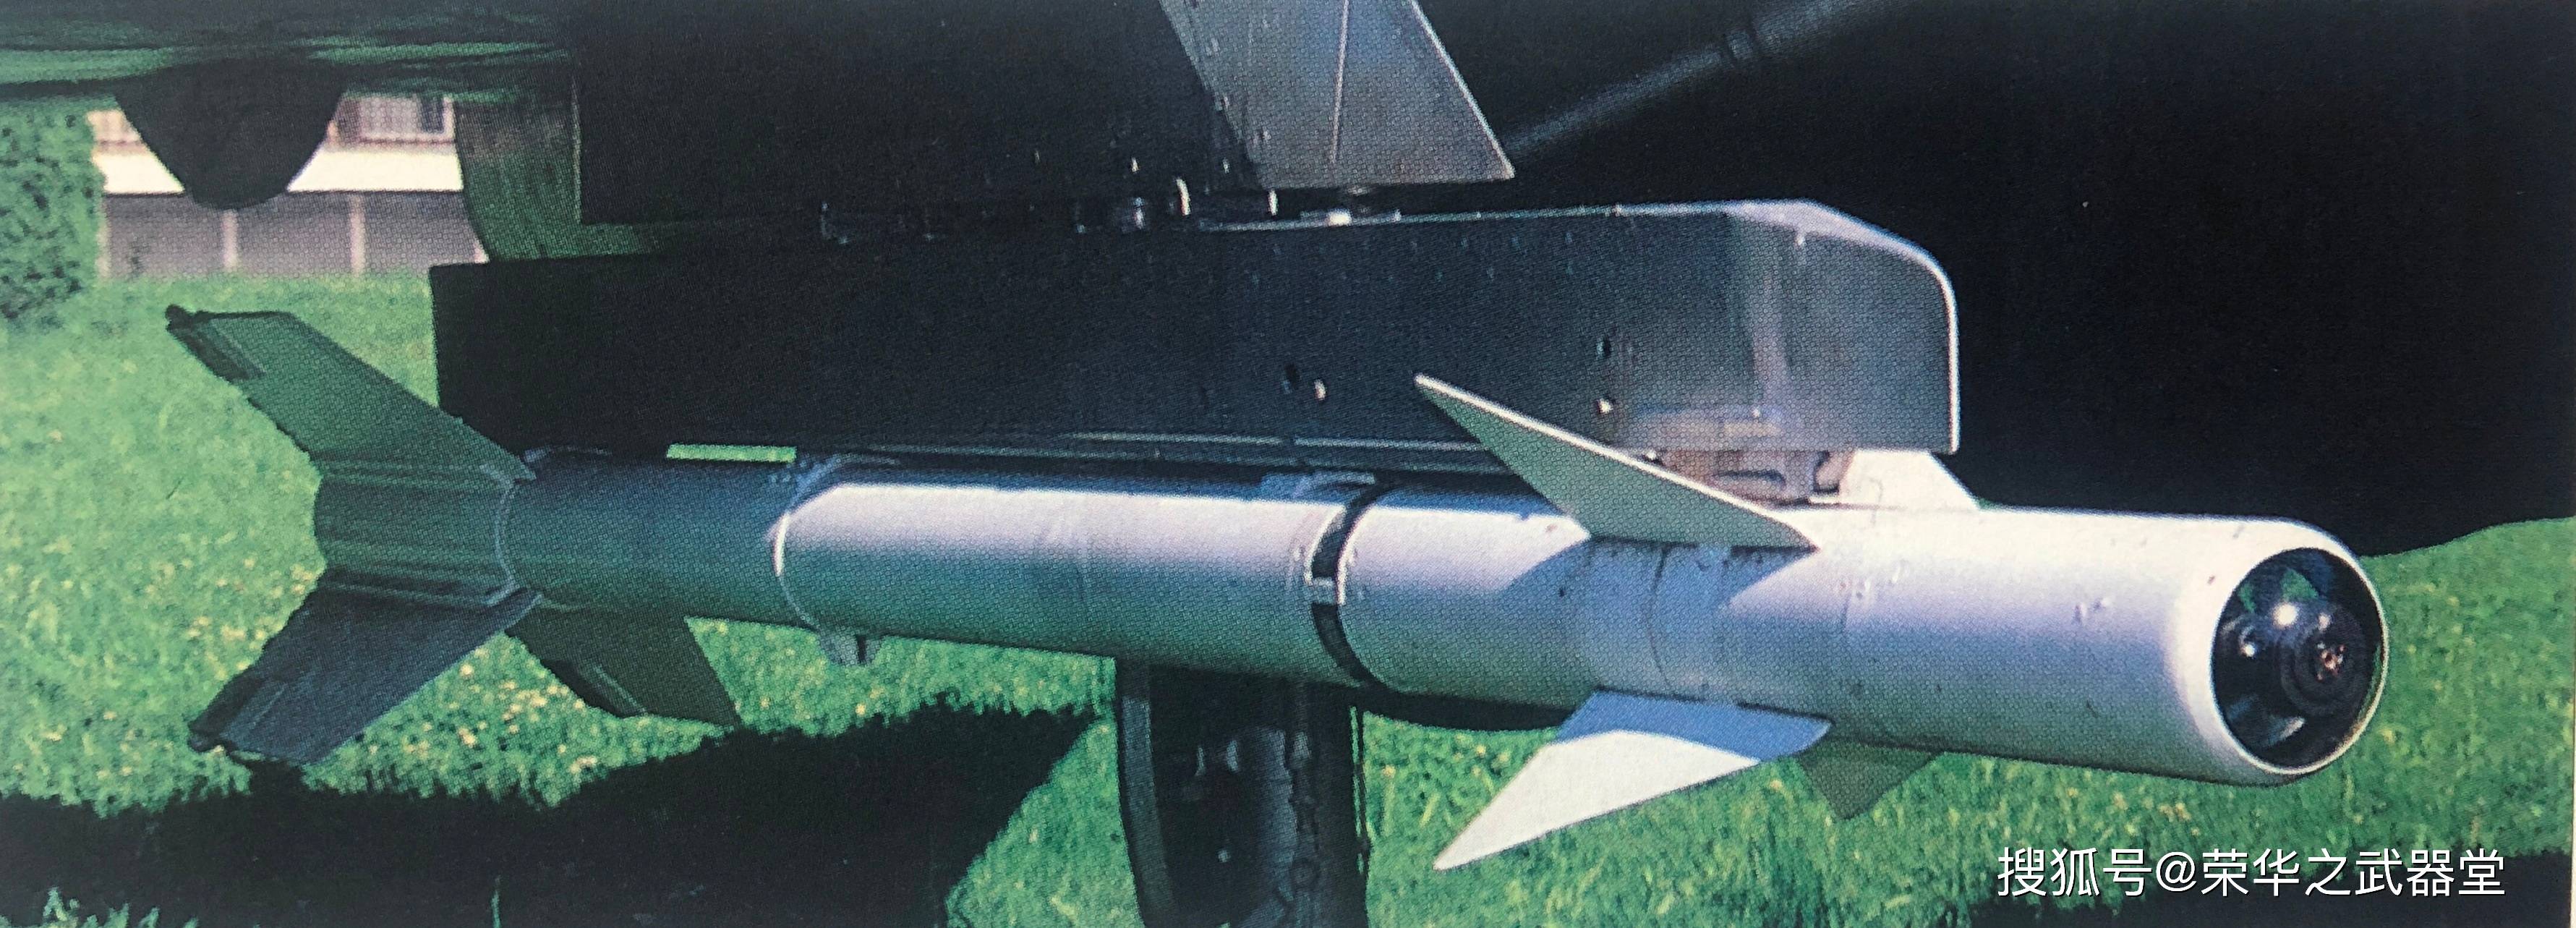 k-13(aa-2)空空导弹